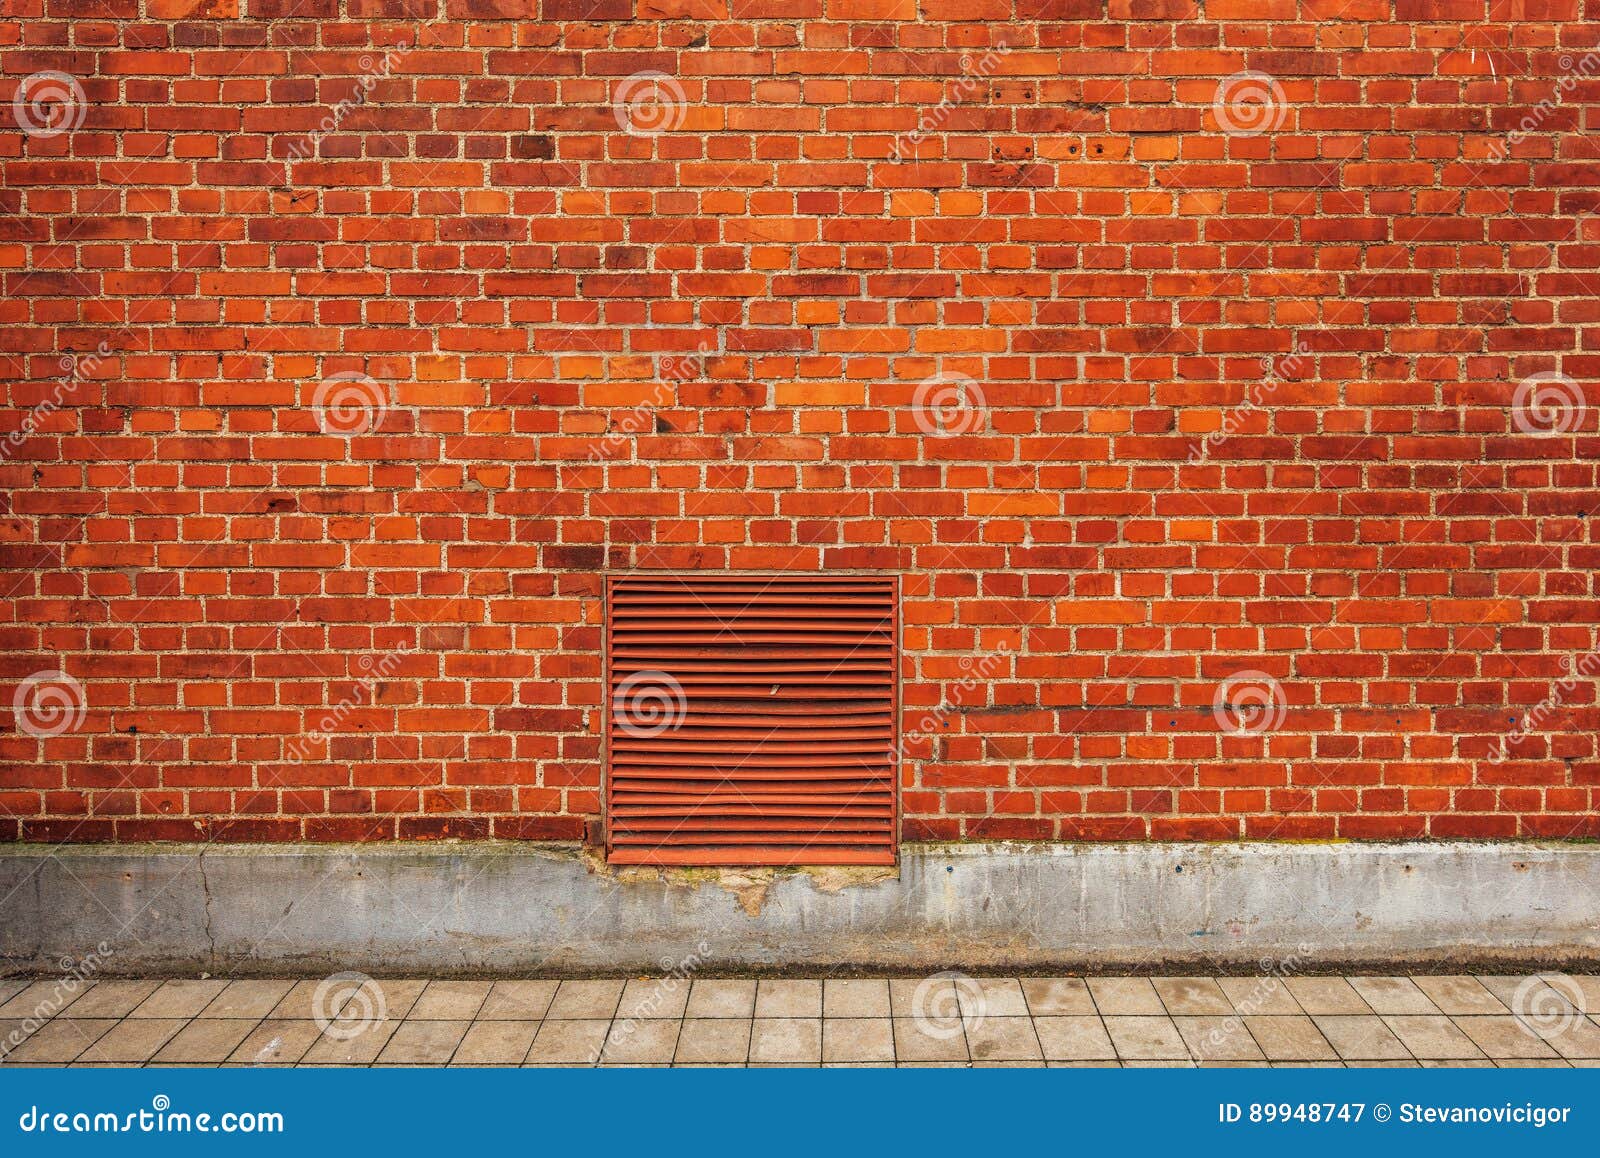 brick wall building facade, urban street backdrop